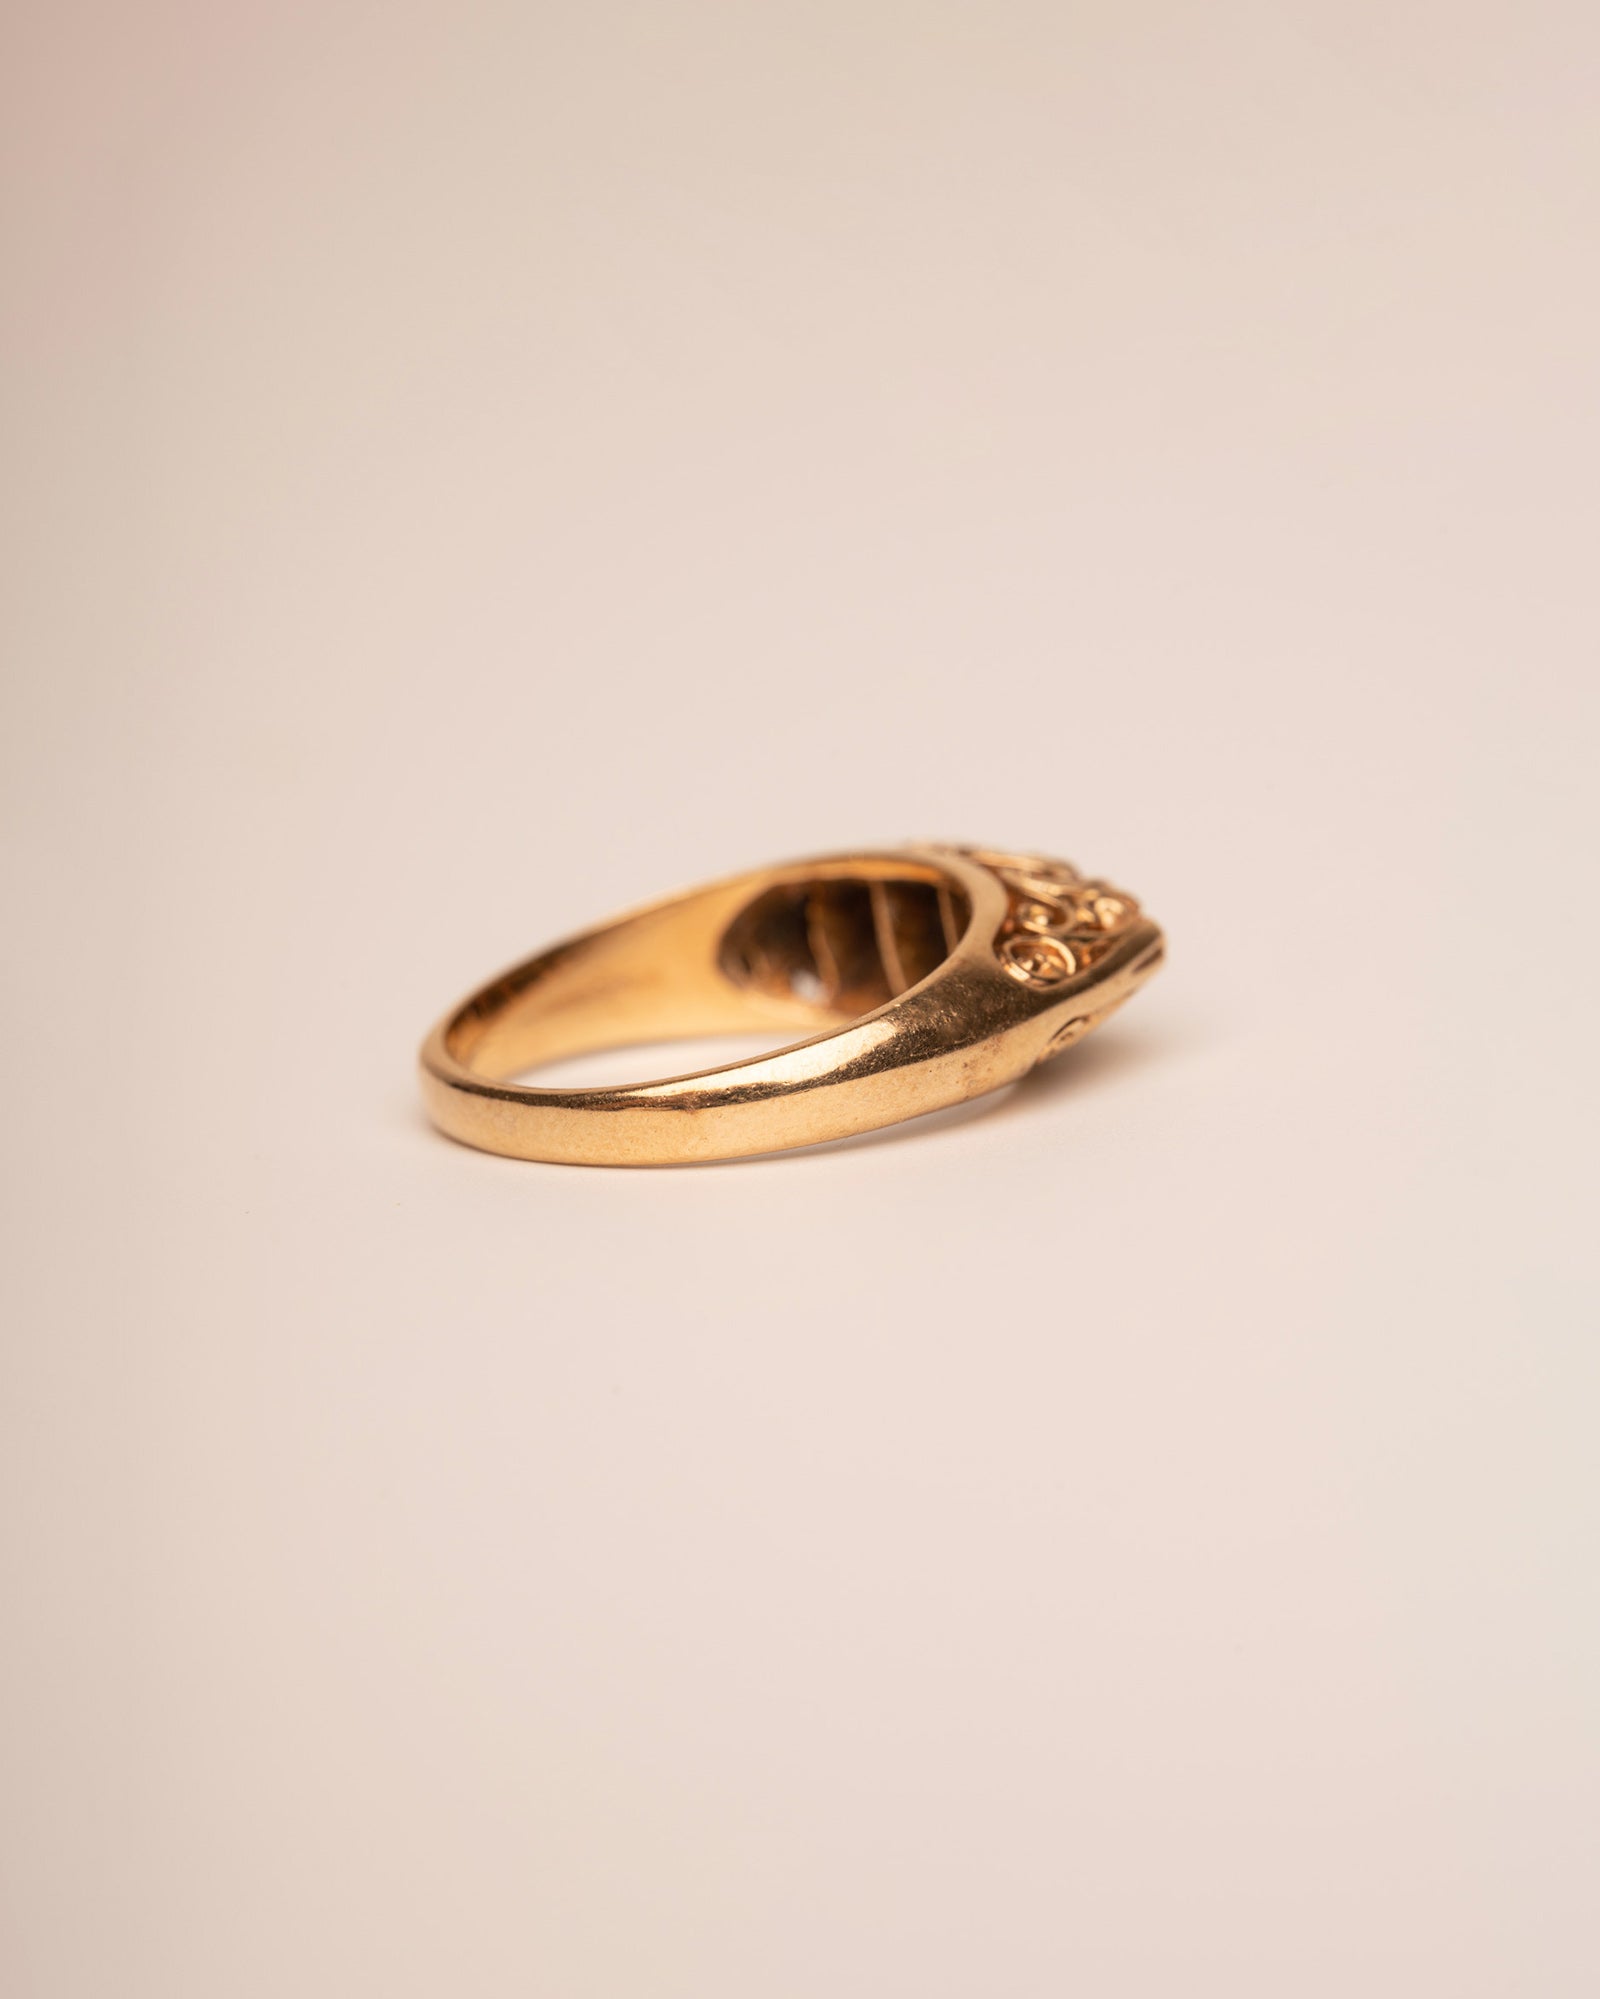 Lavinia 9ct Gold Garnet Ring